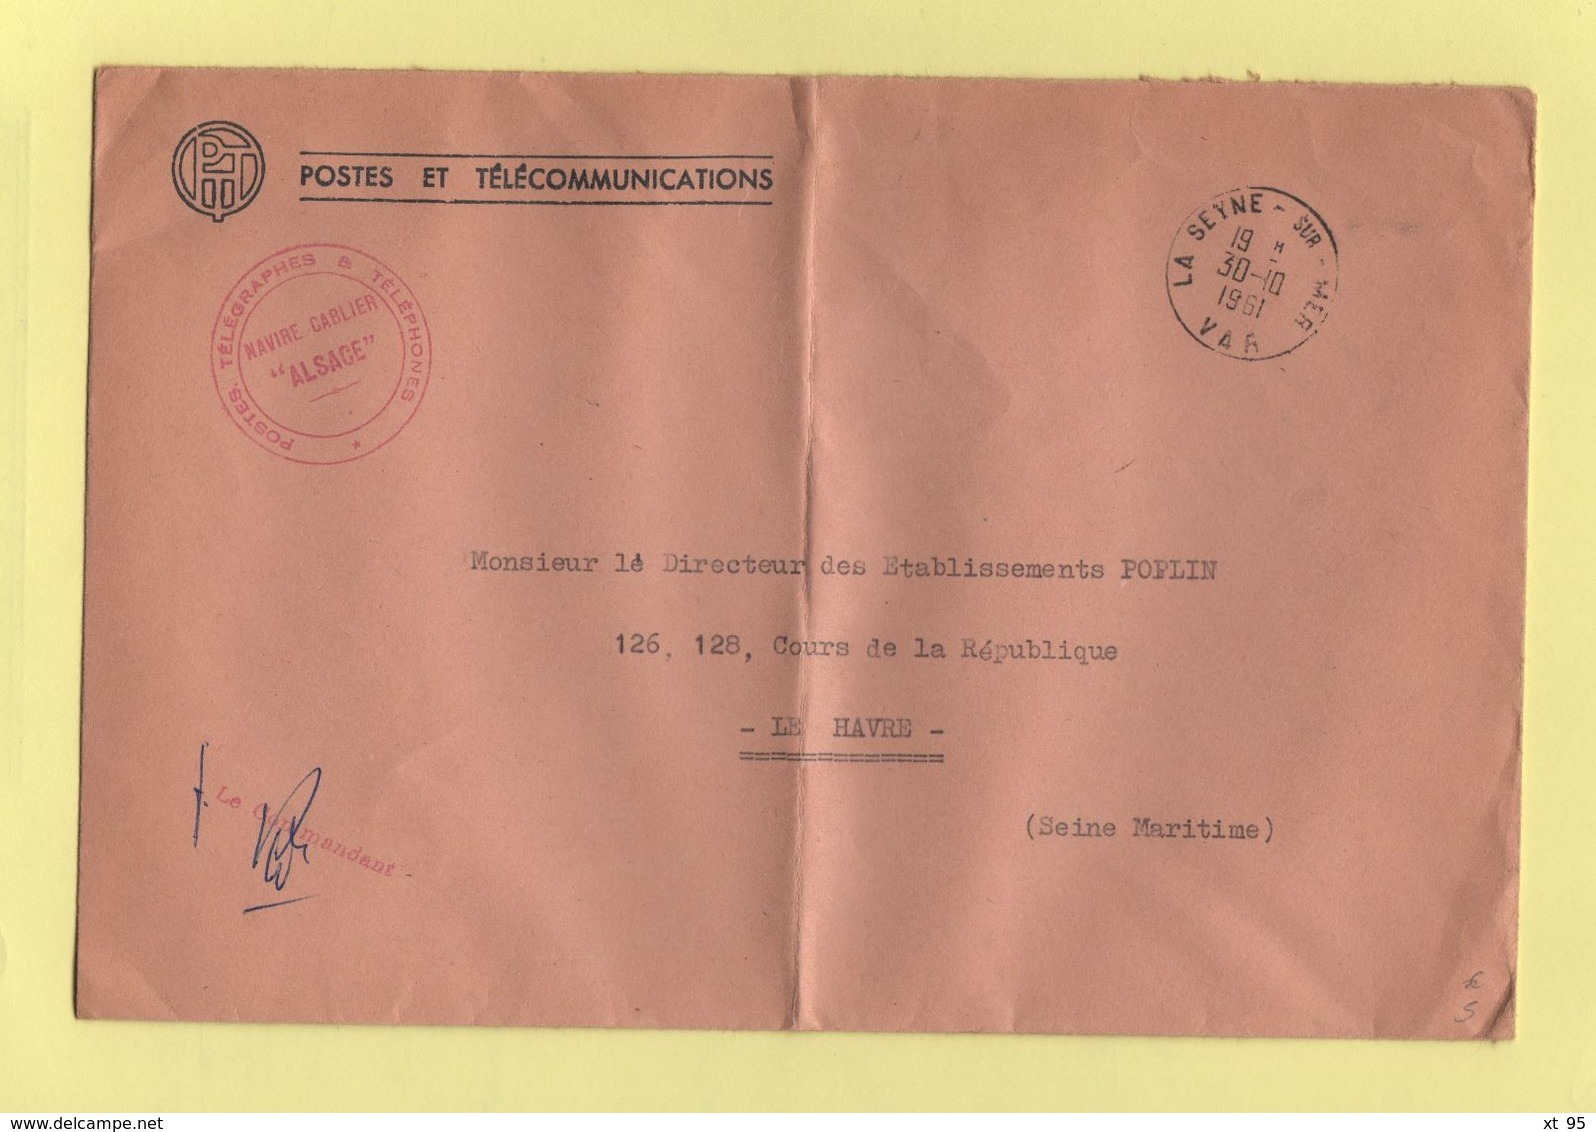 Navire Cablier Alsace - La Seyne Sur Mer - Var - 1961 - Naval Post